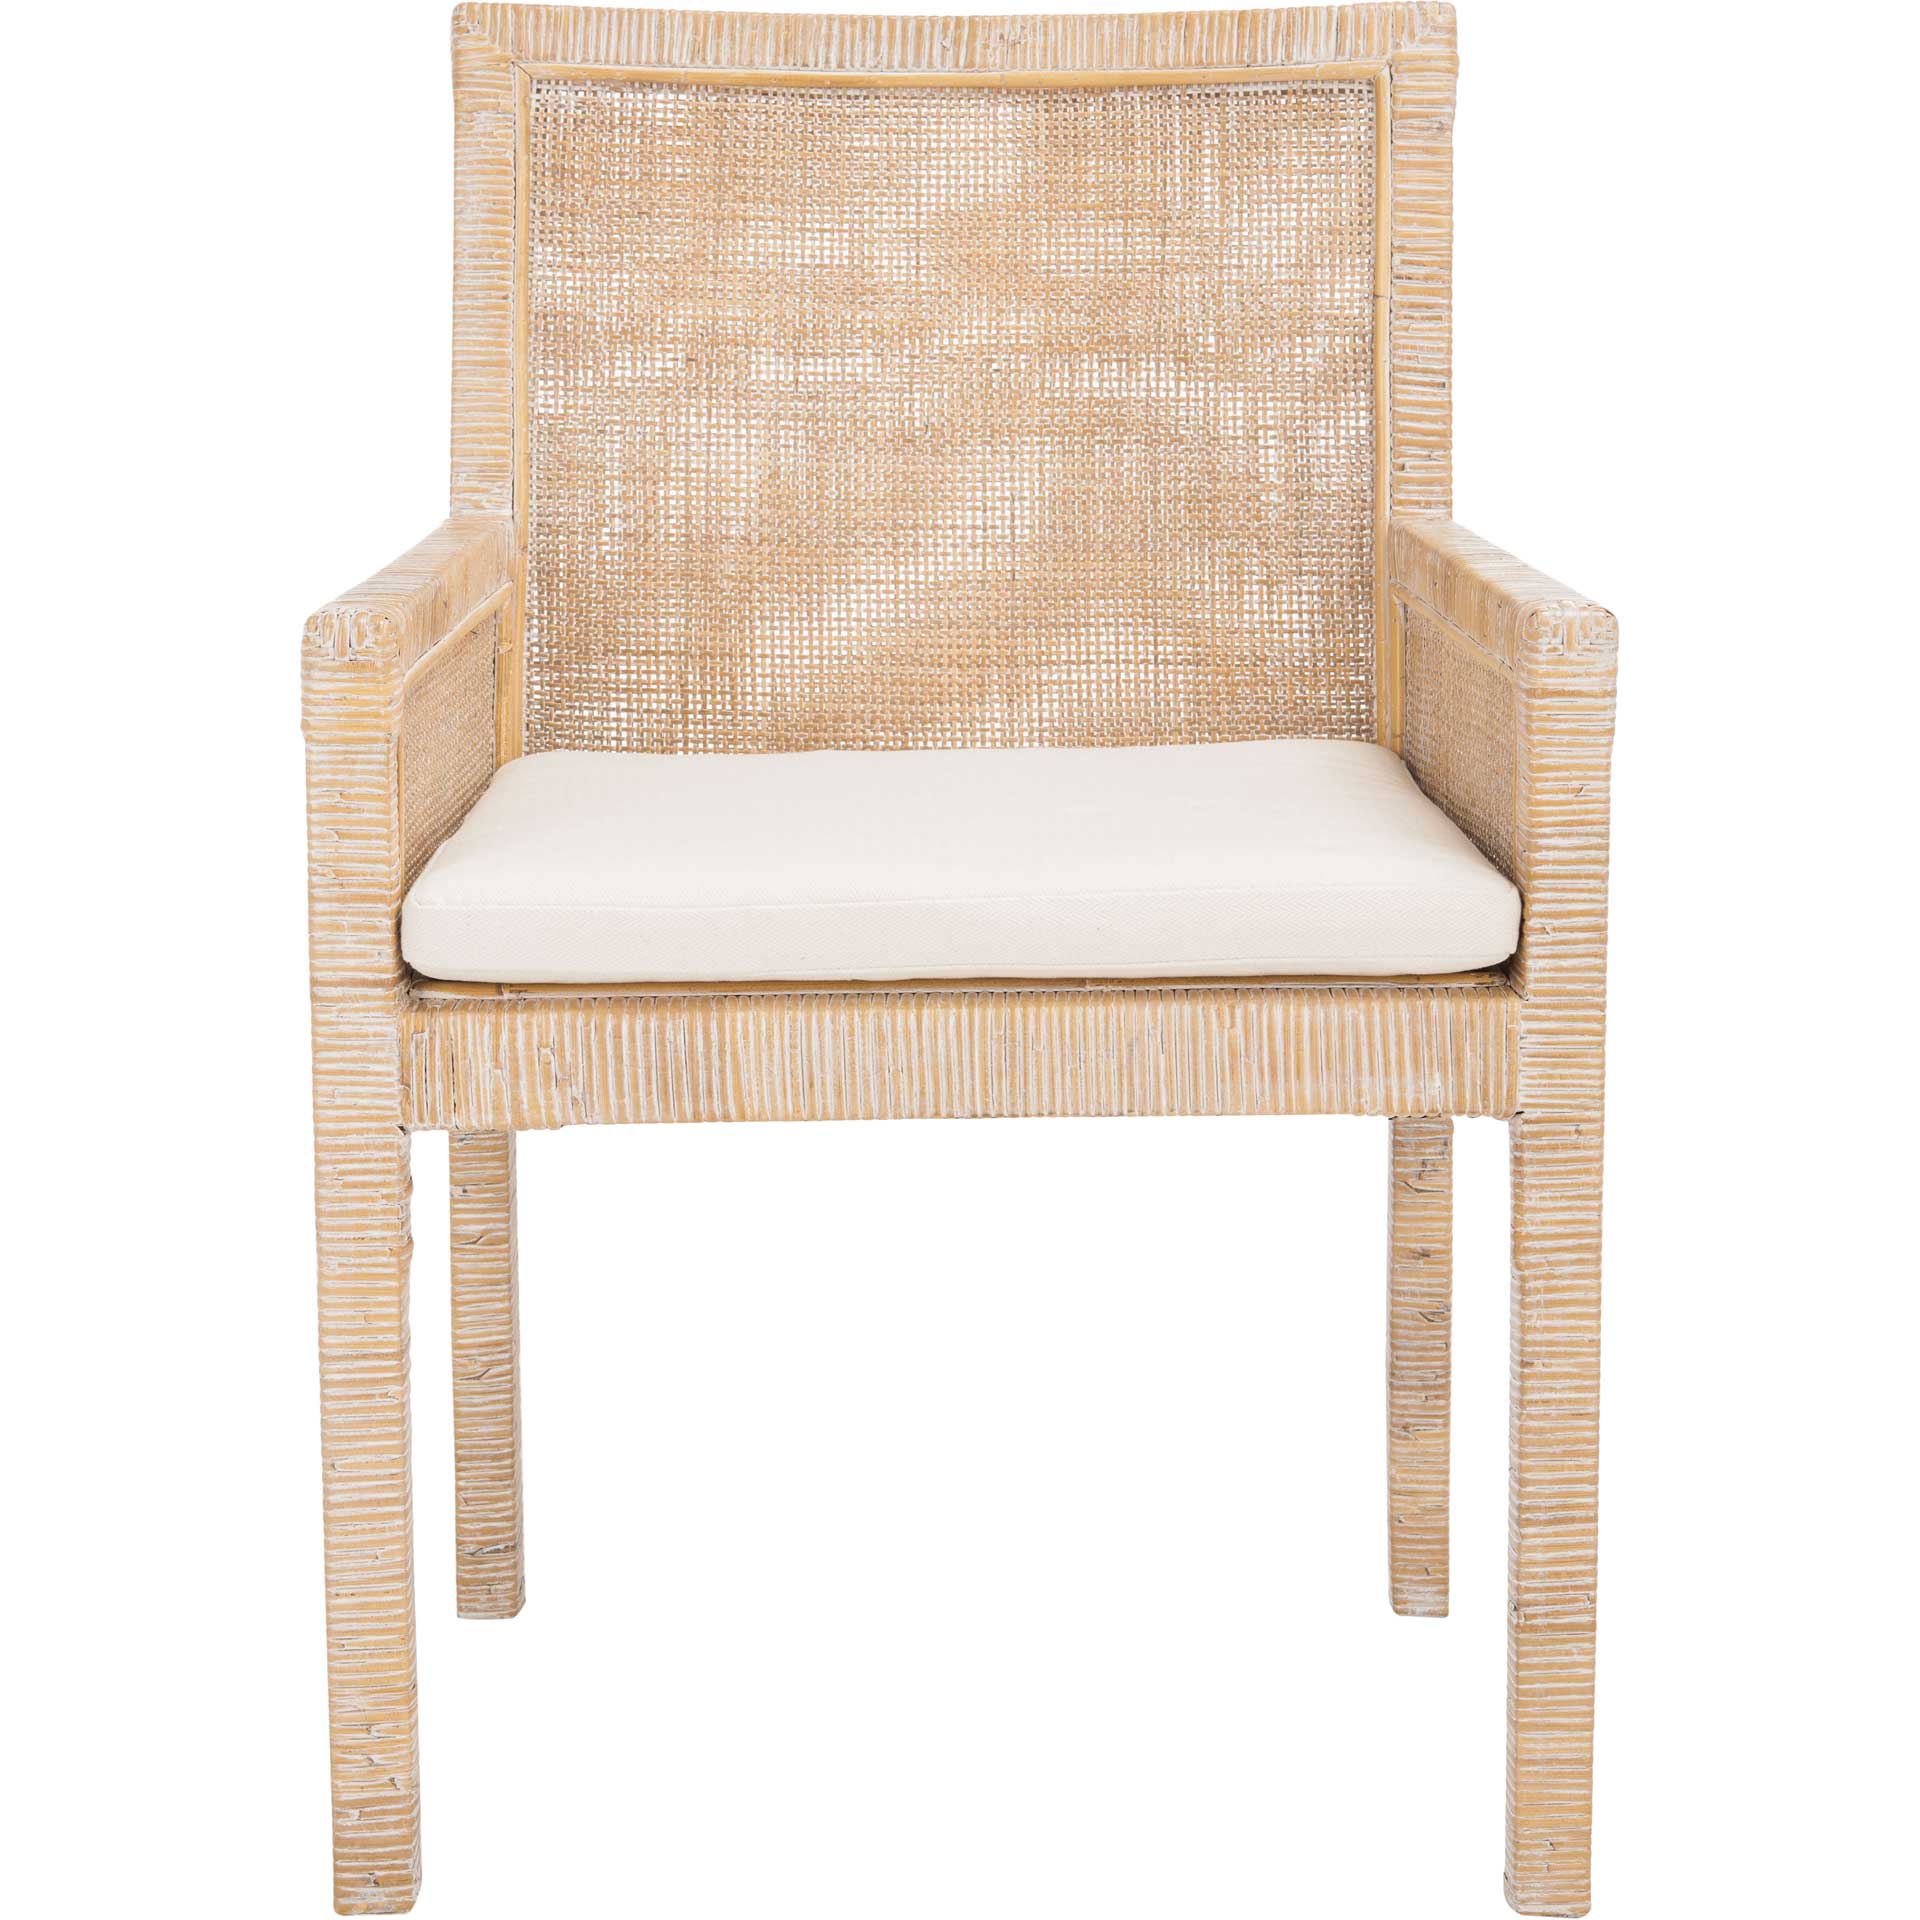 Saffron Accent Chair With Cushion Gray White Wash